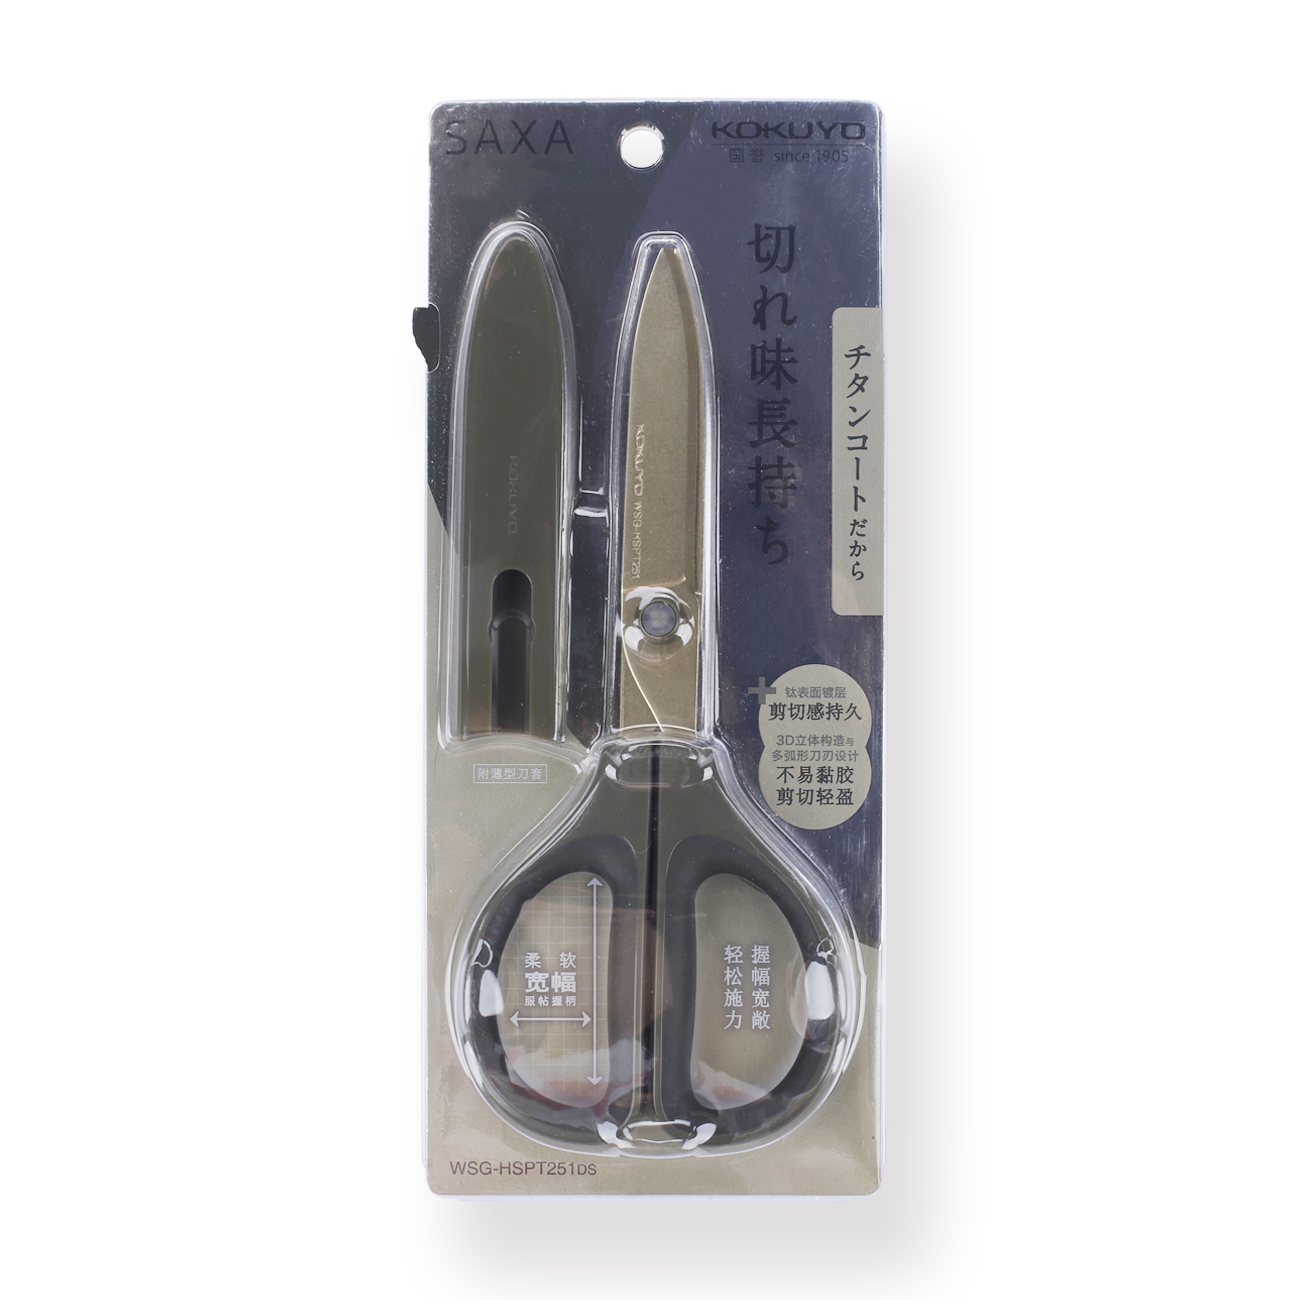 1pc KOKUYO WSCN-HS250 AIRO FIT SAXA Adult Hand Craft Scissors Non